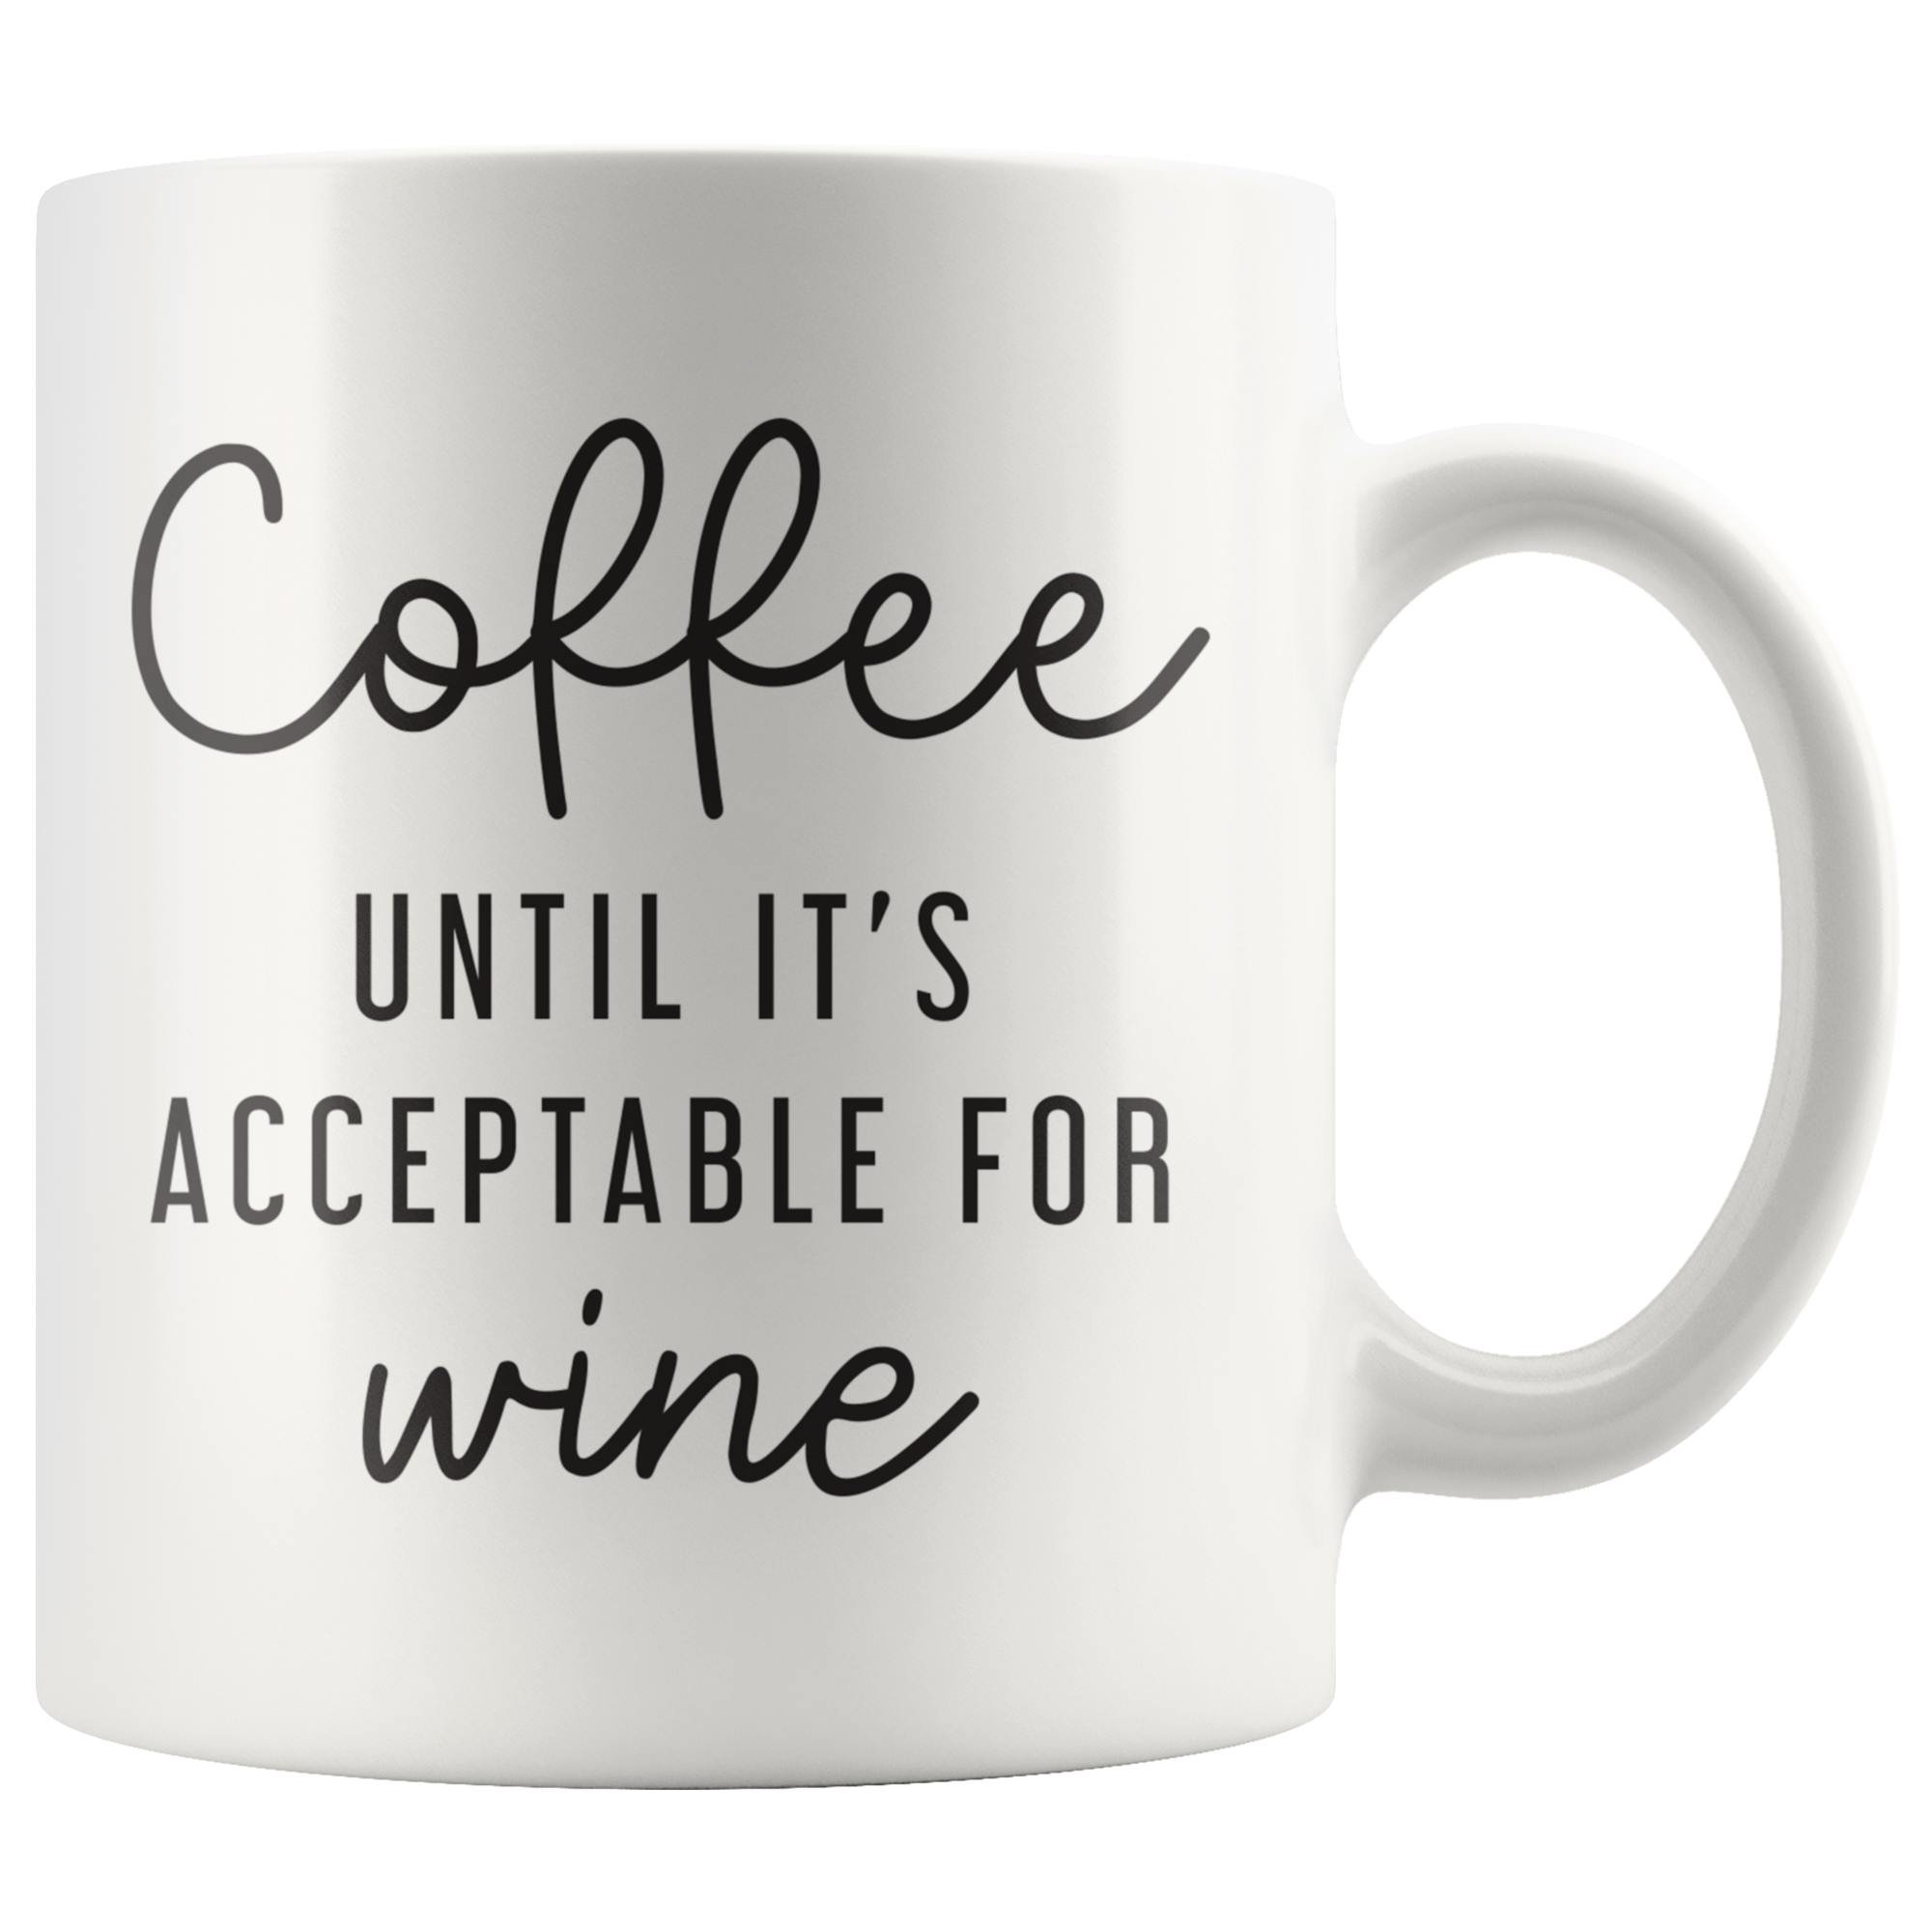 Unacceptable For Wine Coffee Mug